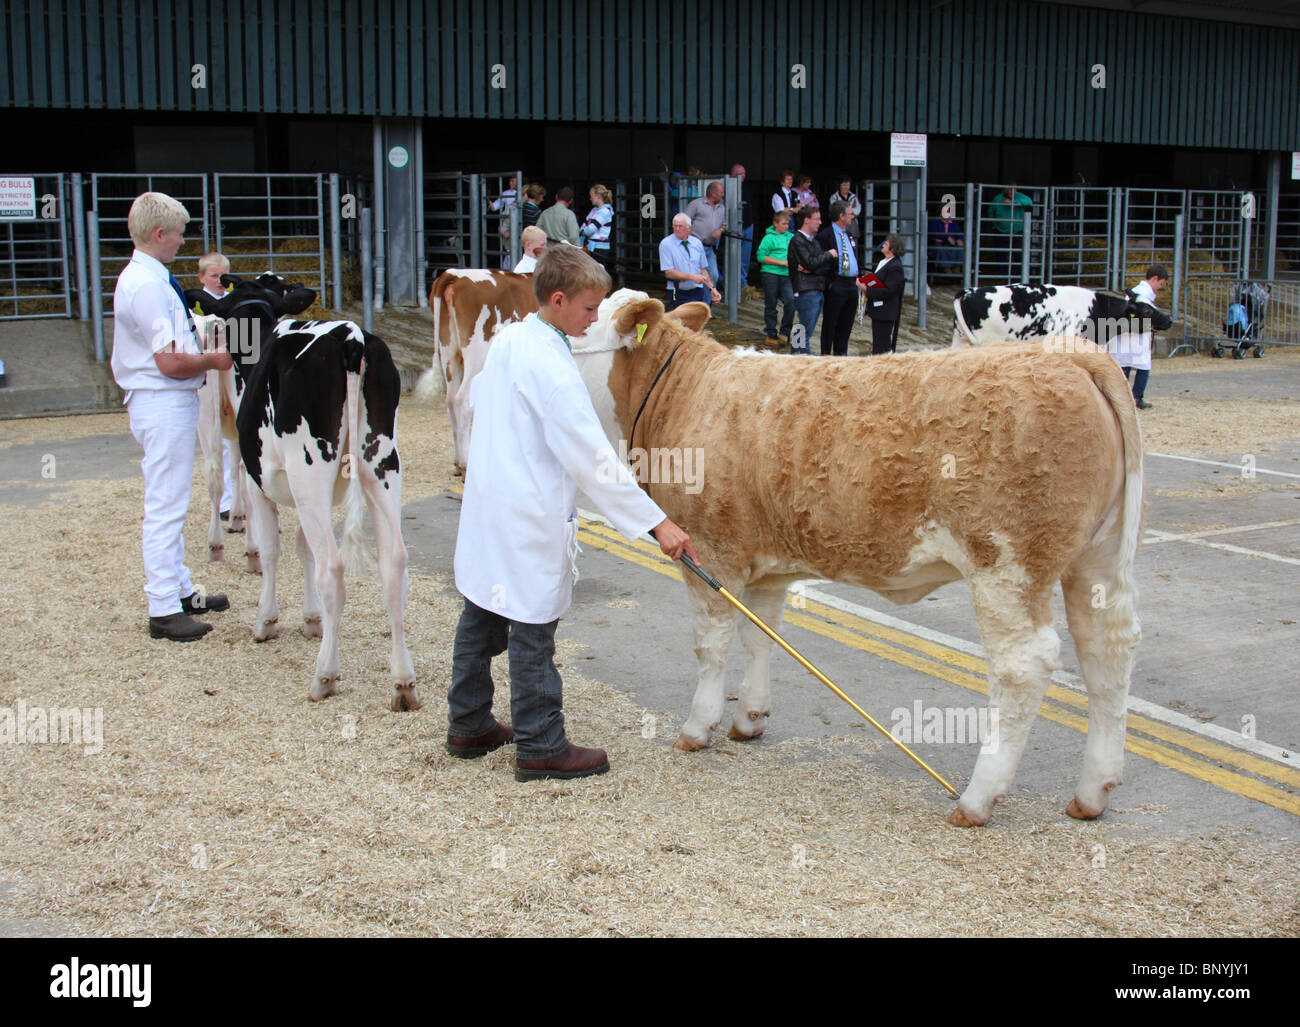 Un giovane agricoltore che mostra bestiame al Bakewell Show, Bakewell, Derbyshire, Engalnd, R.U. Foto Stock